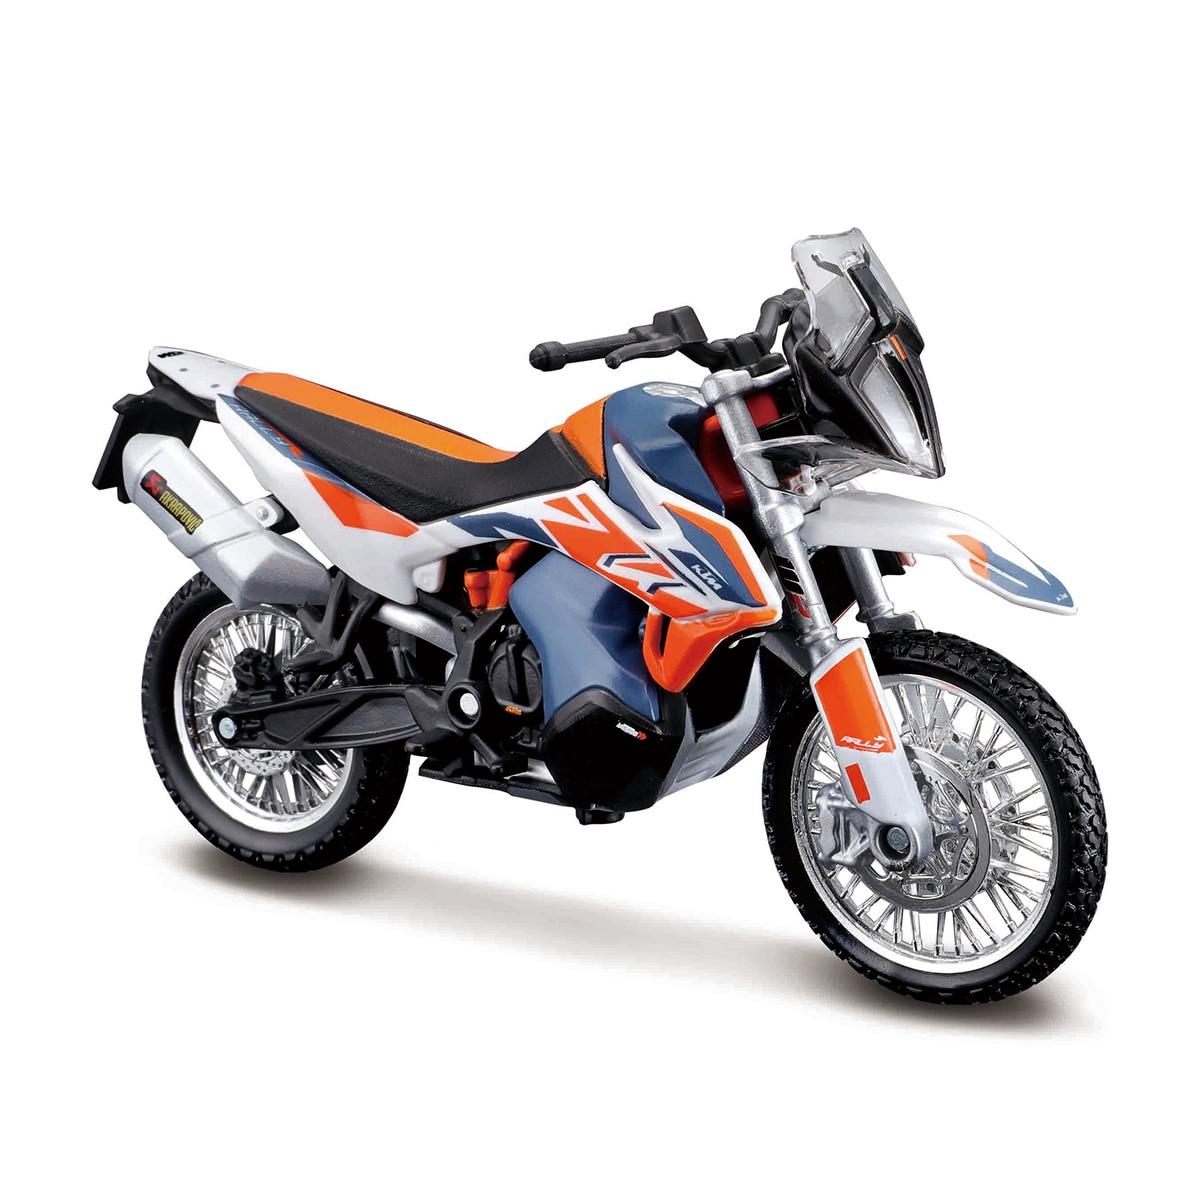 Bburago-1-18-KTM-790-Adventure-R-Rally-Static-Die-Cast-Vehicles-Collectible-Motorcycle-Model-Toys.jpg